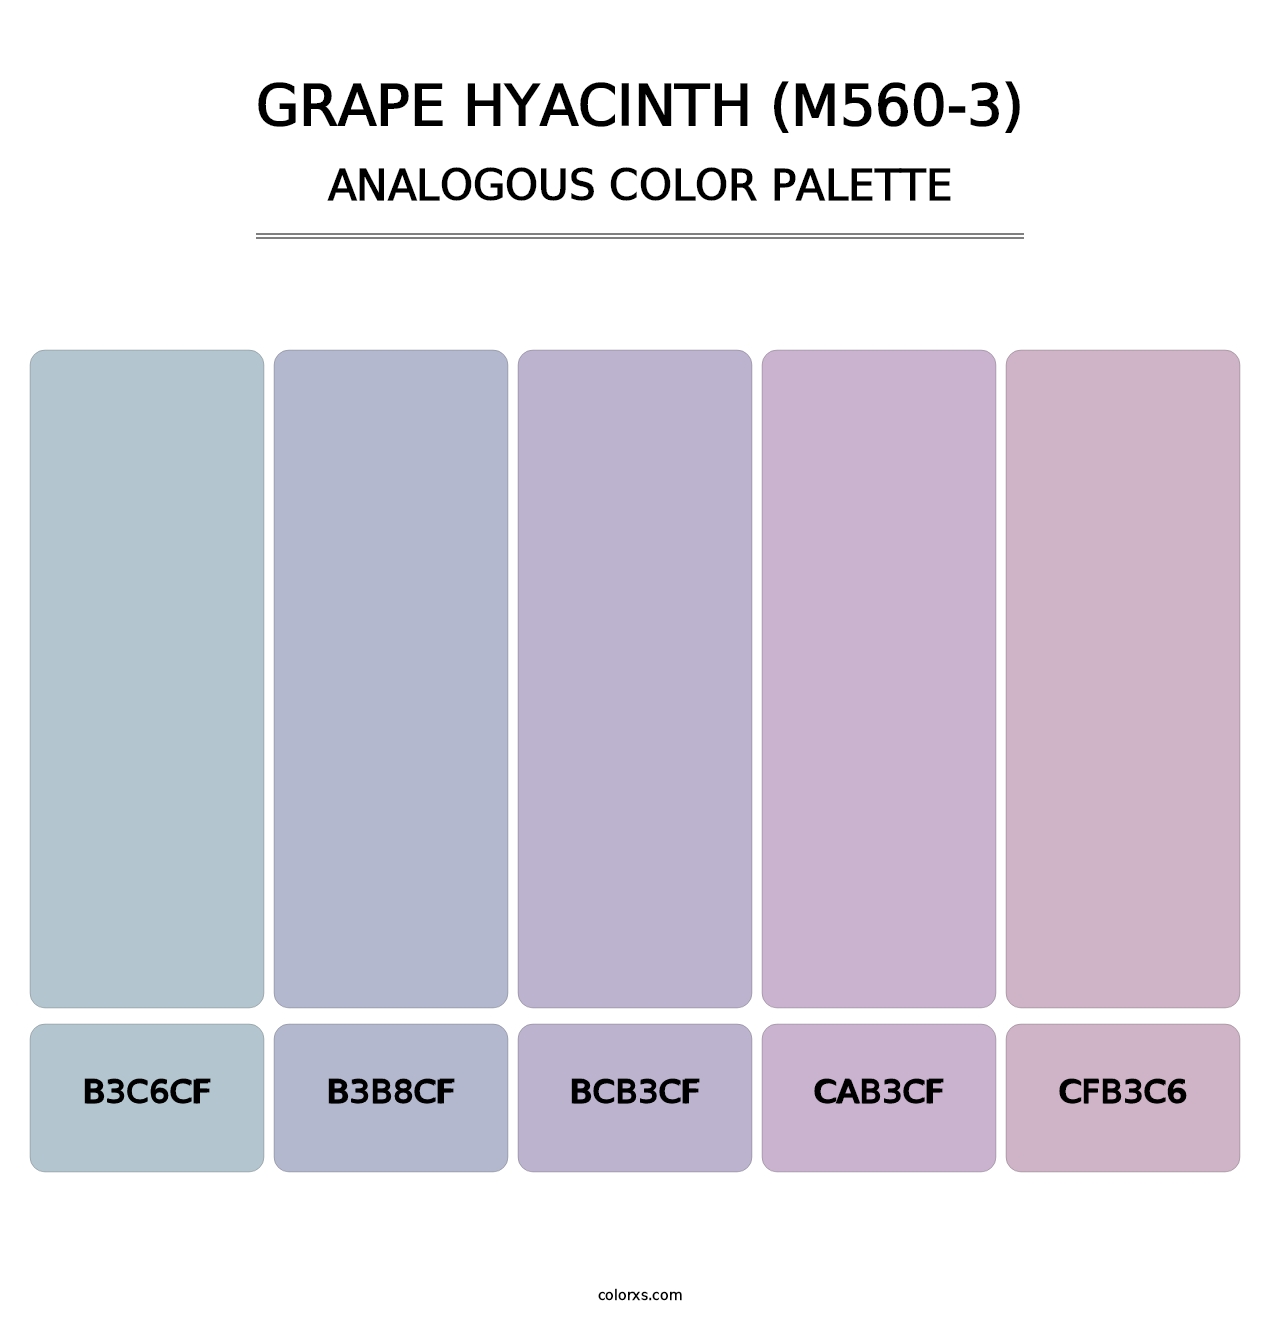 Grape Hyacinth (M560-3) - Analogous Color Palette